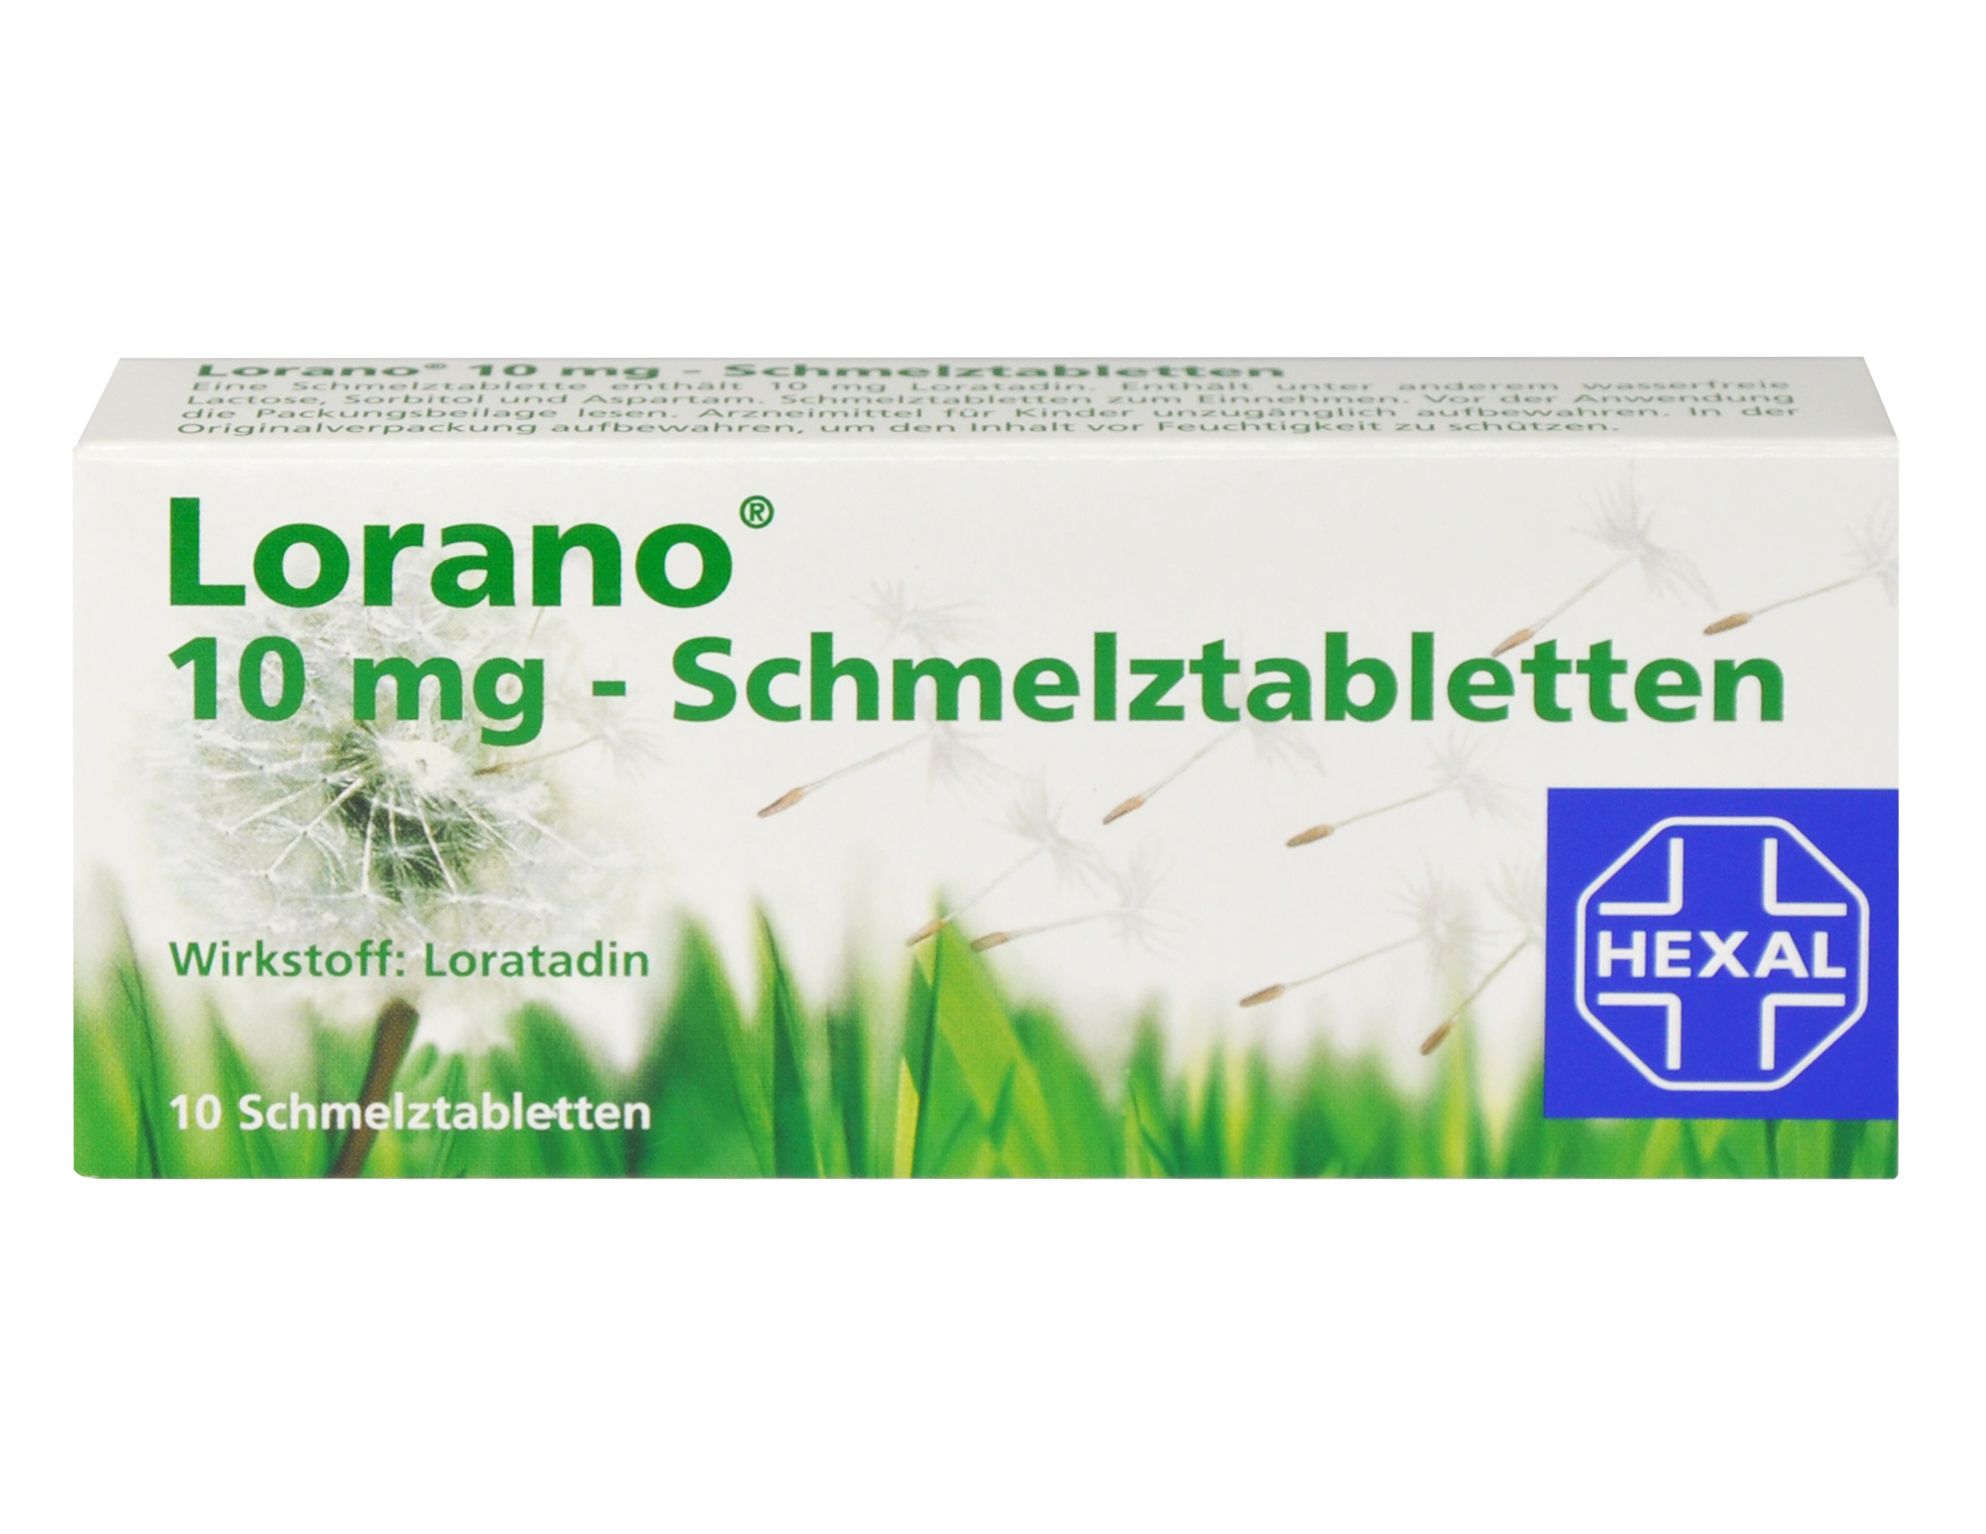 Lorano 10 mg - Schmelztabletten